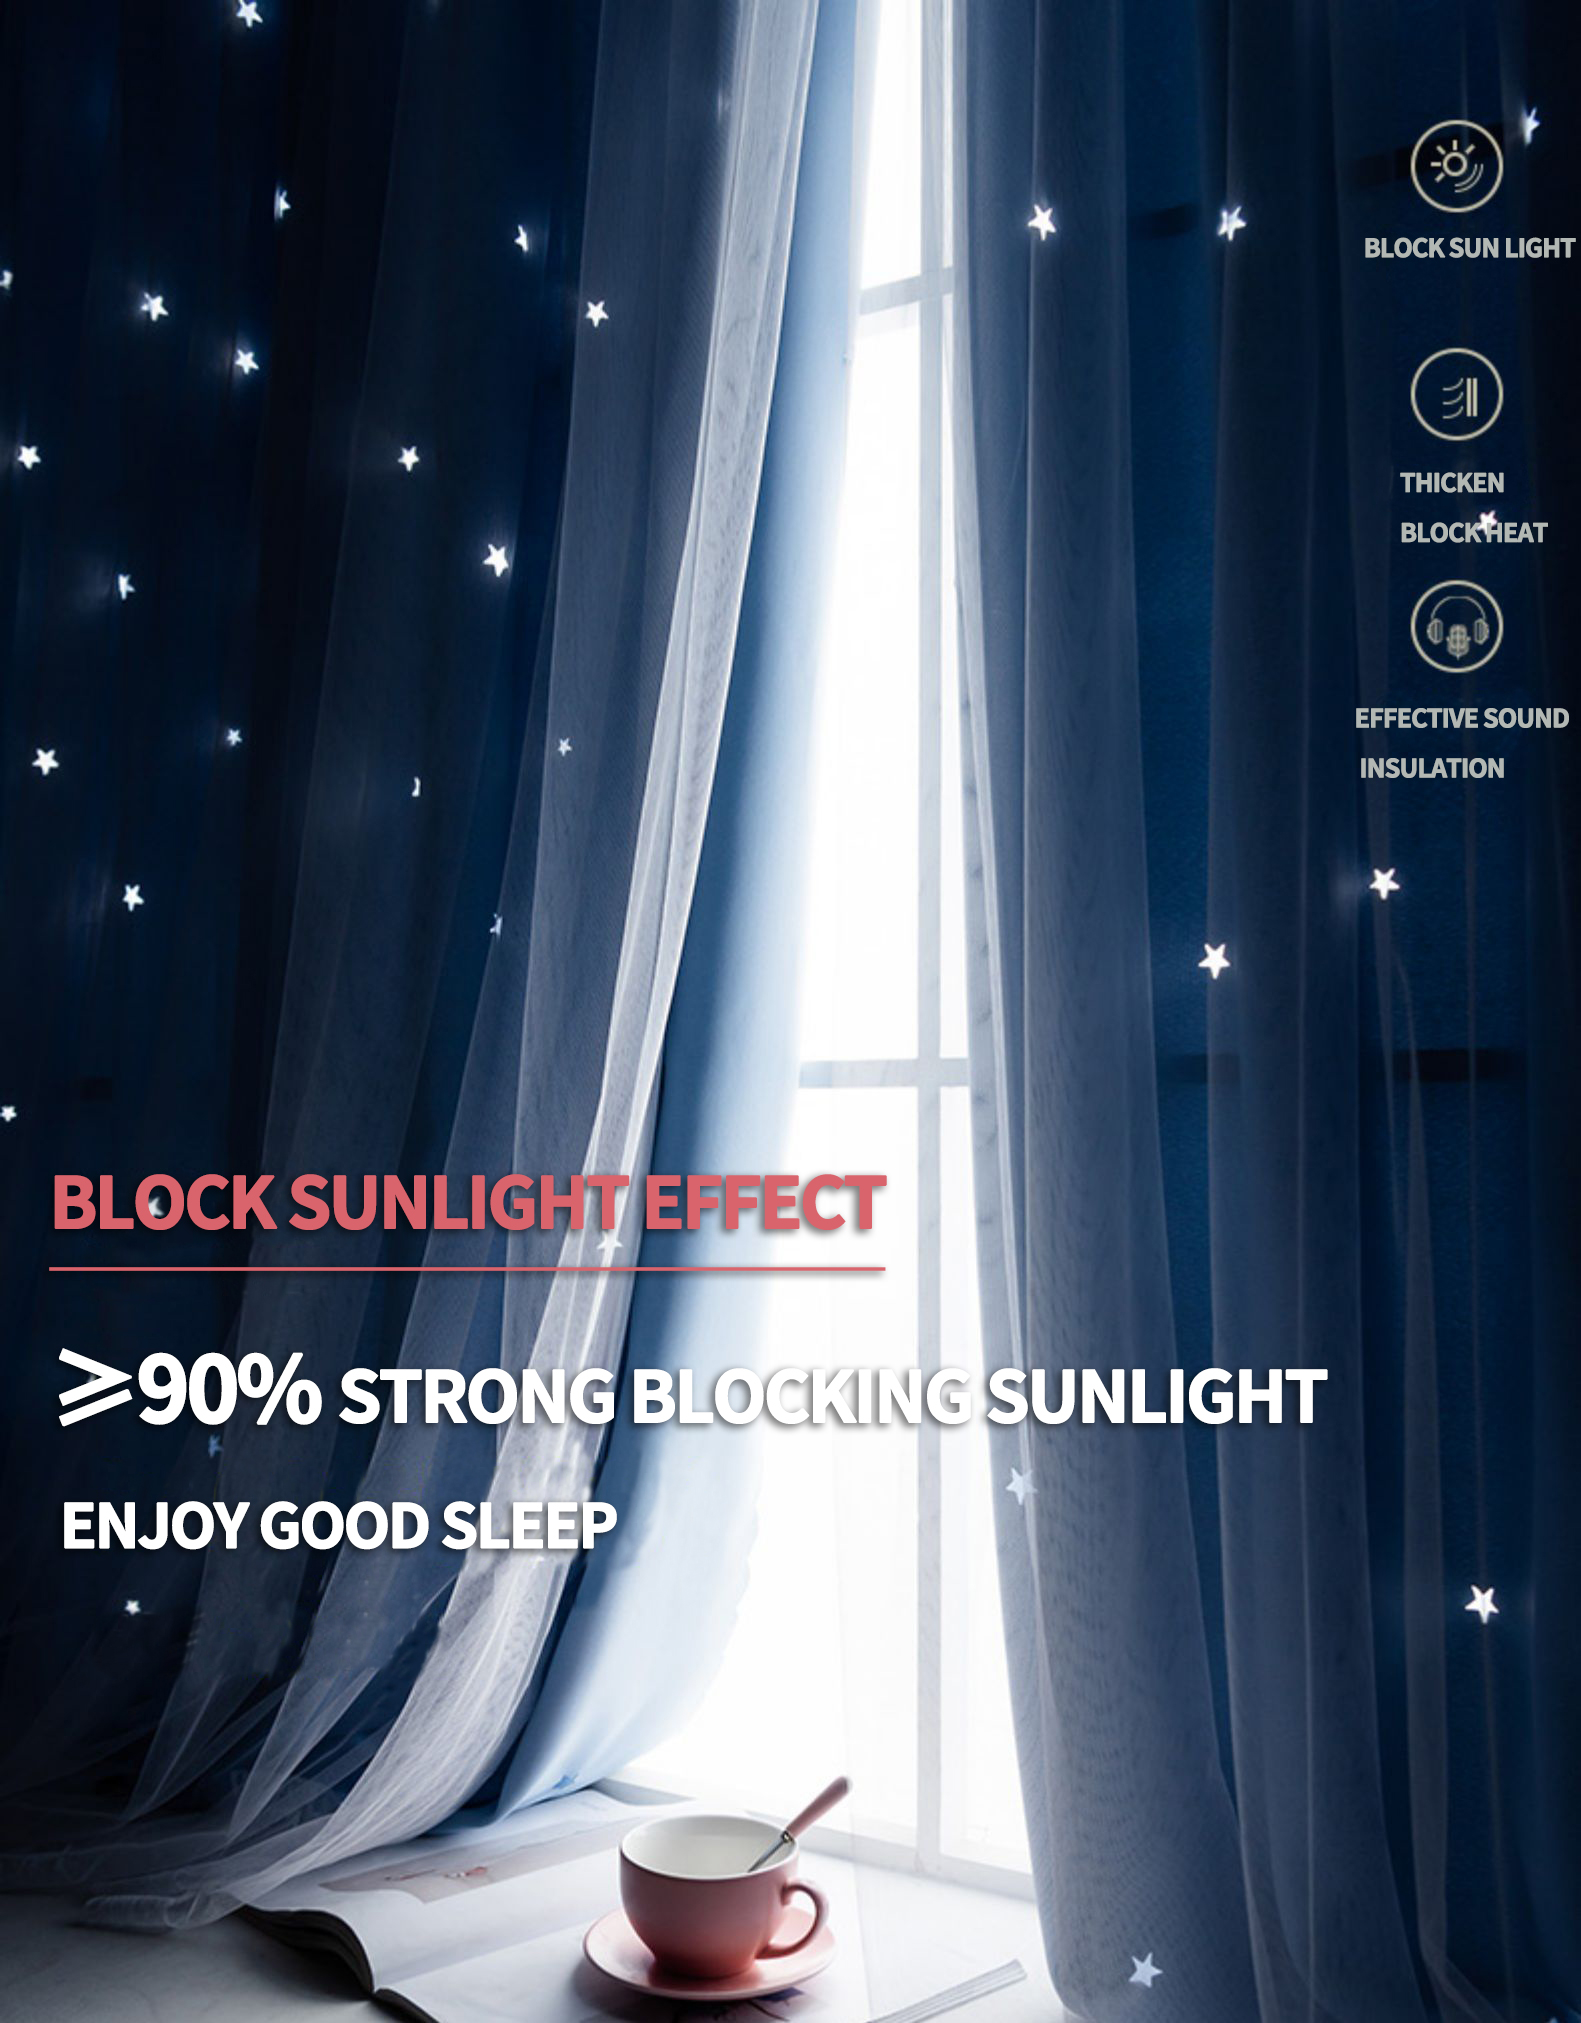 Lumig Bintang Thermal Insulated Blackout Tirai untuk Bilik Tidur Bilik Tidur Tirai Tirai Velcro Tiada Tebukan Tirai